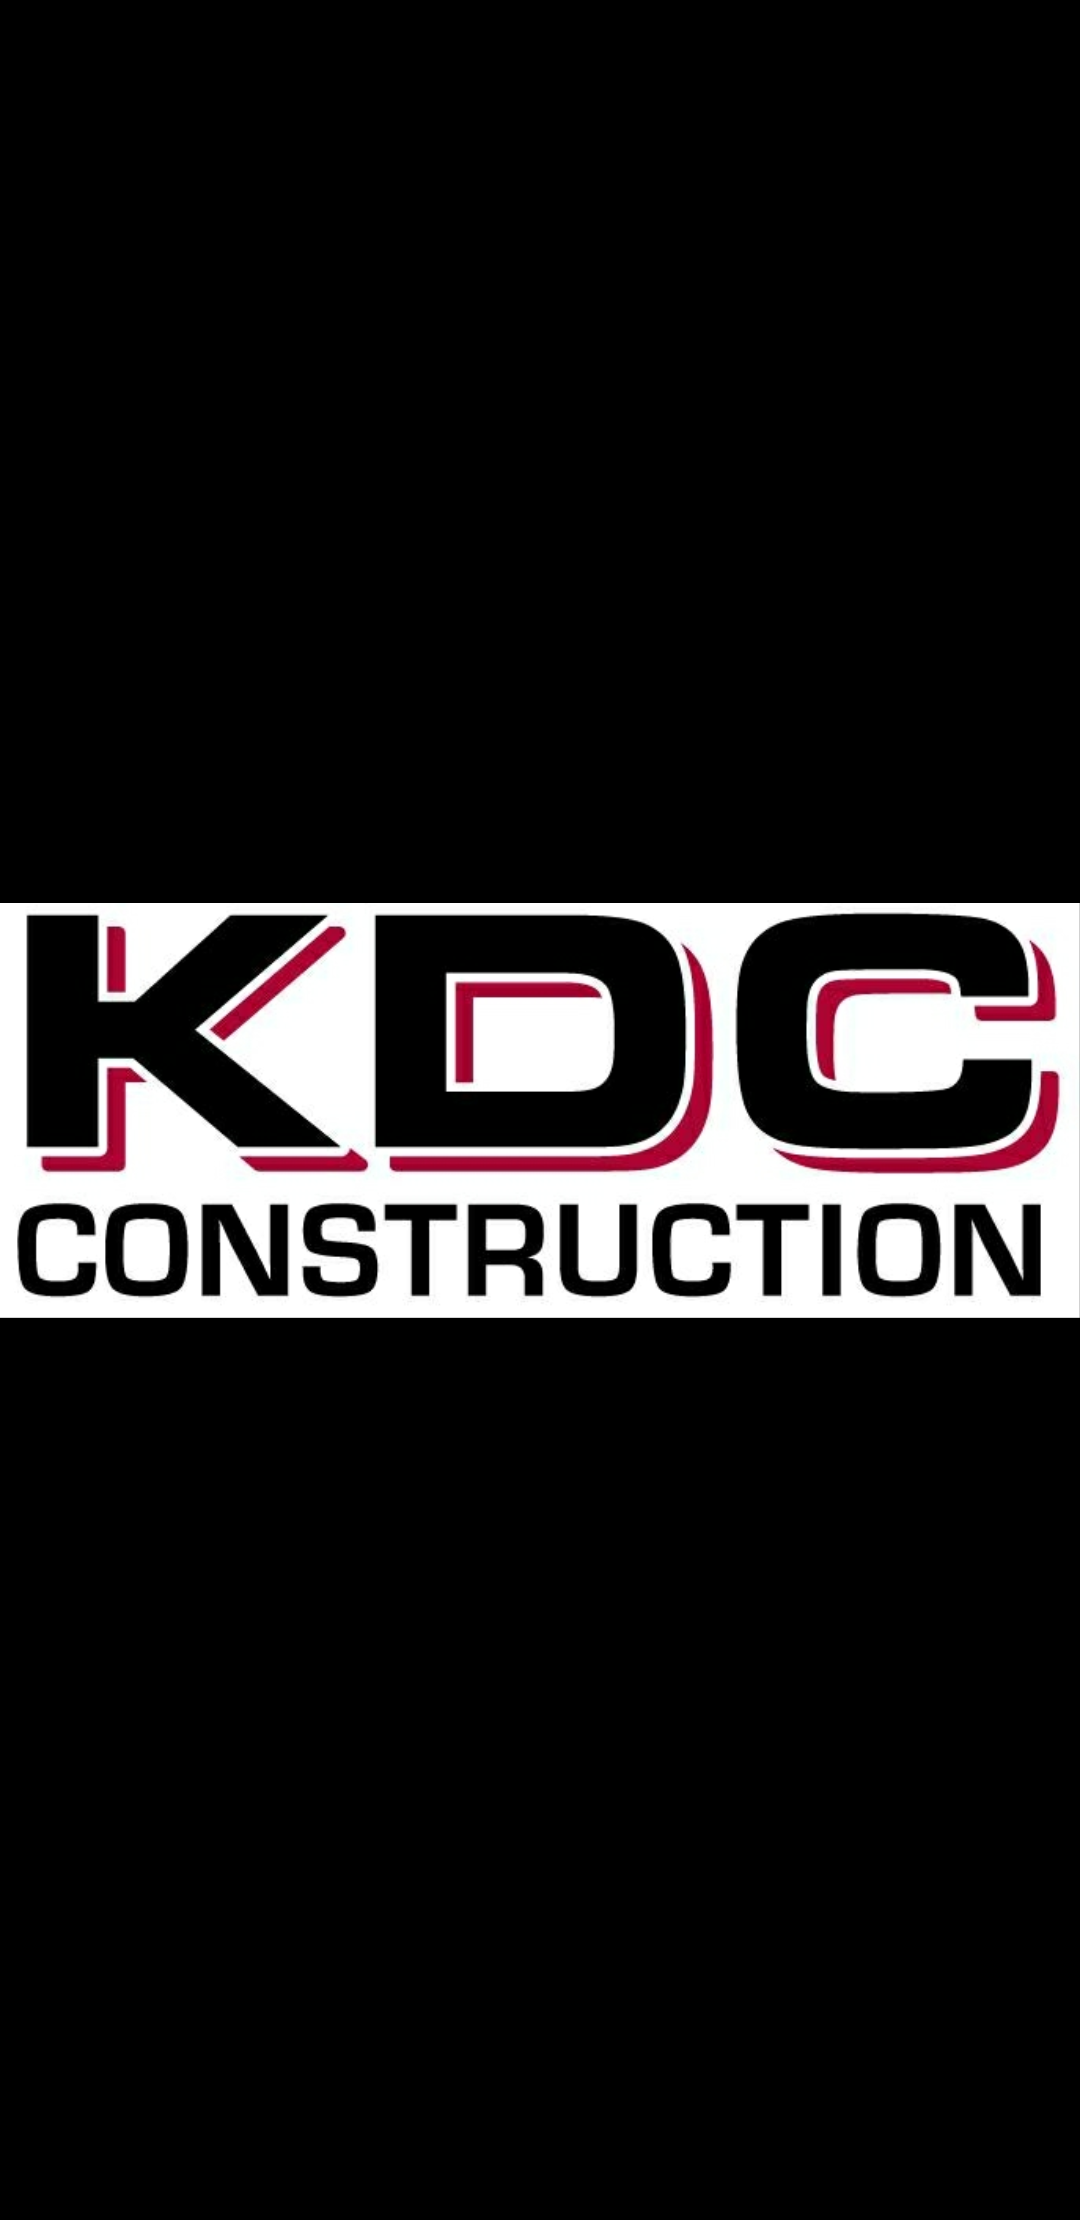 KDC CONSTRUCTION SAFETY REPORT (Sliding Scale2021.4)
    